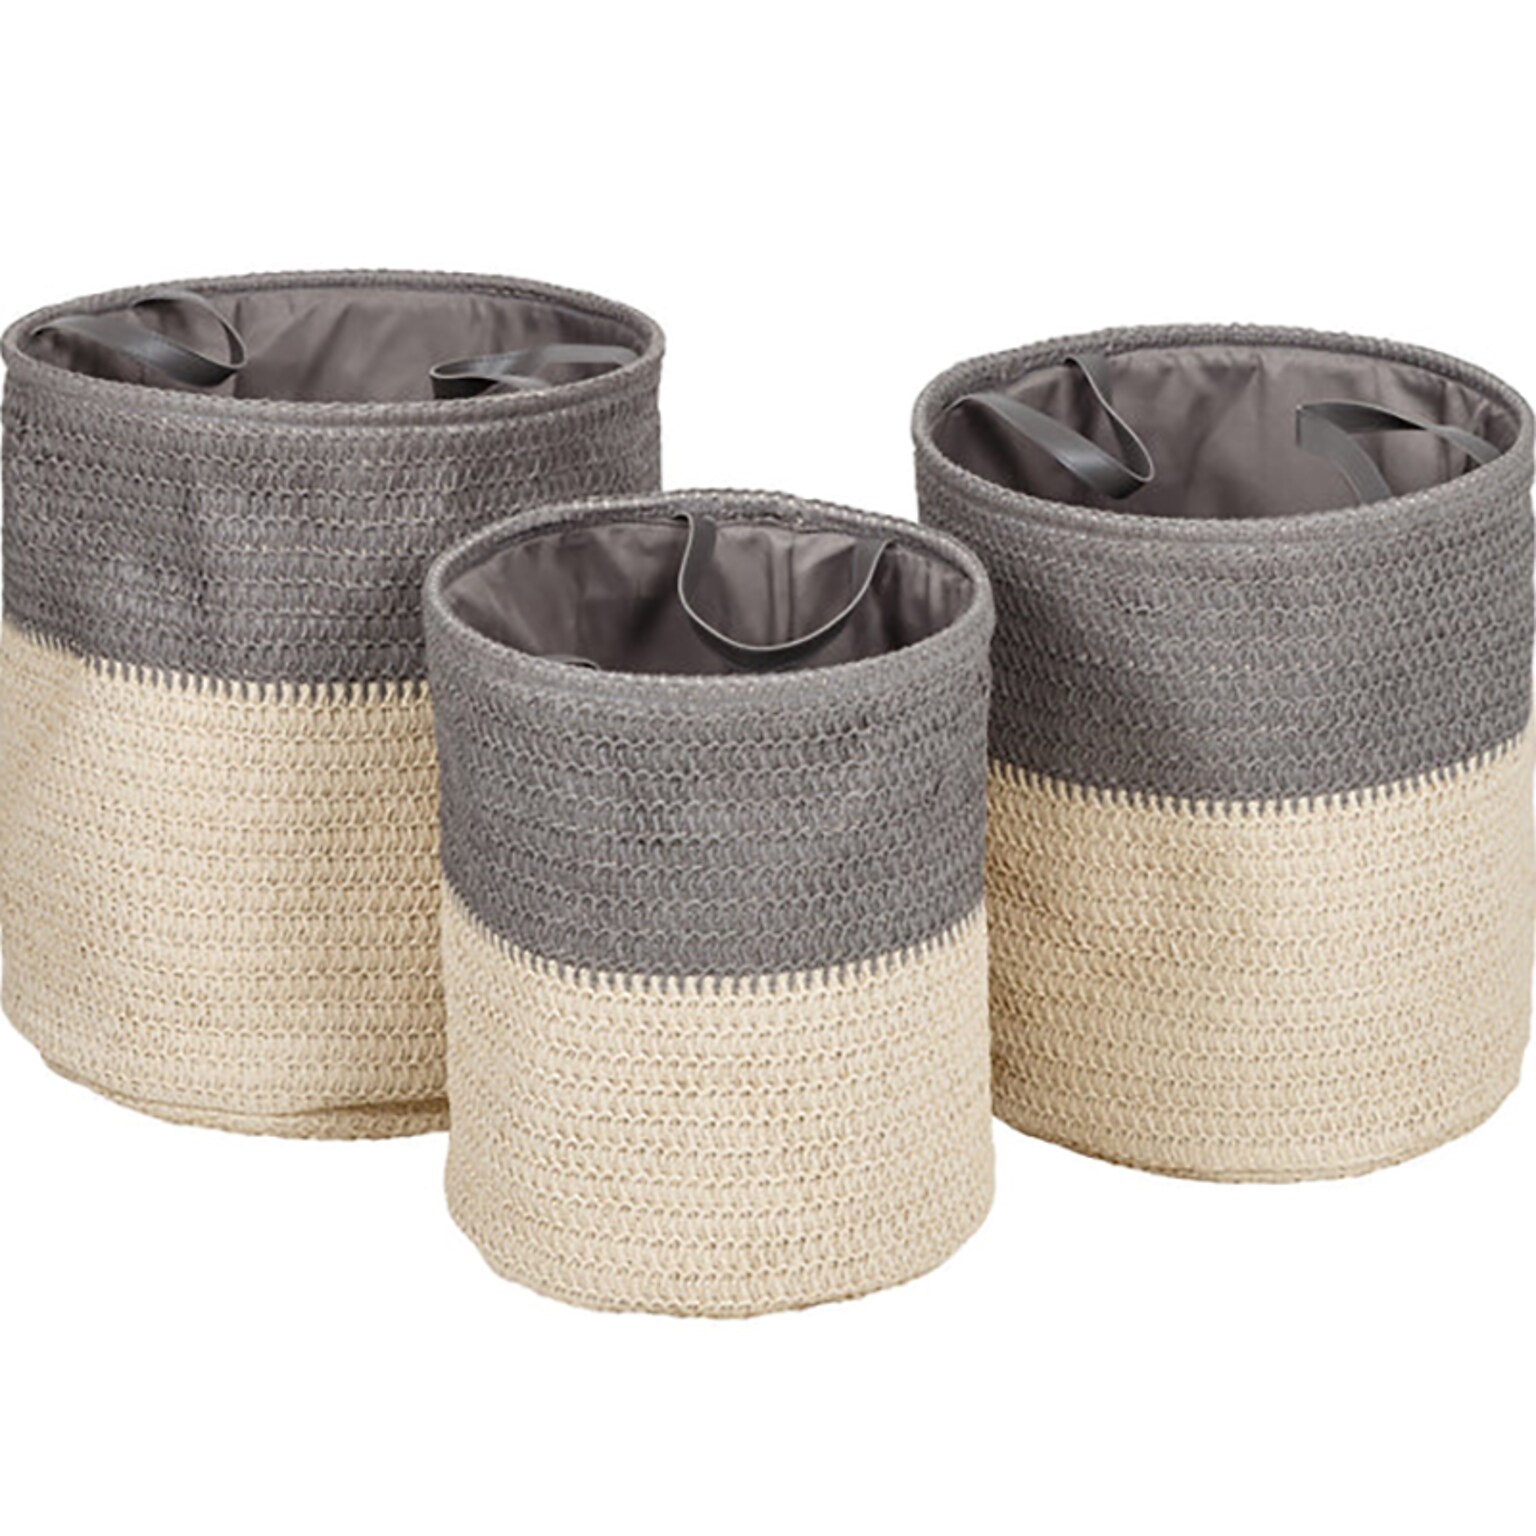 Honey-Can-Do Nesting Baskets with Handles, Gray/Natural, 3/Set (HMP-09574)